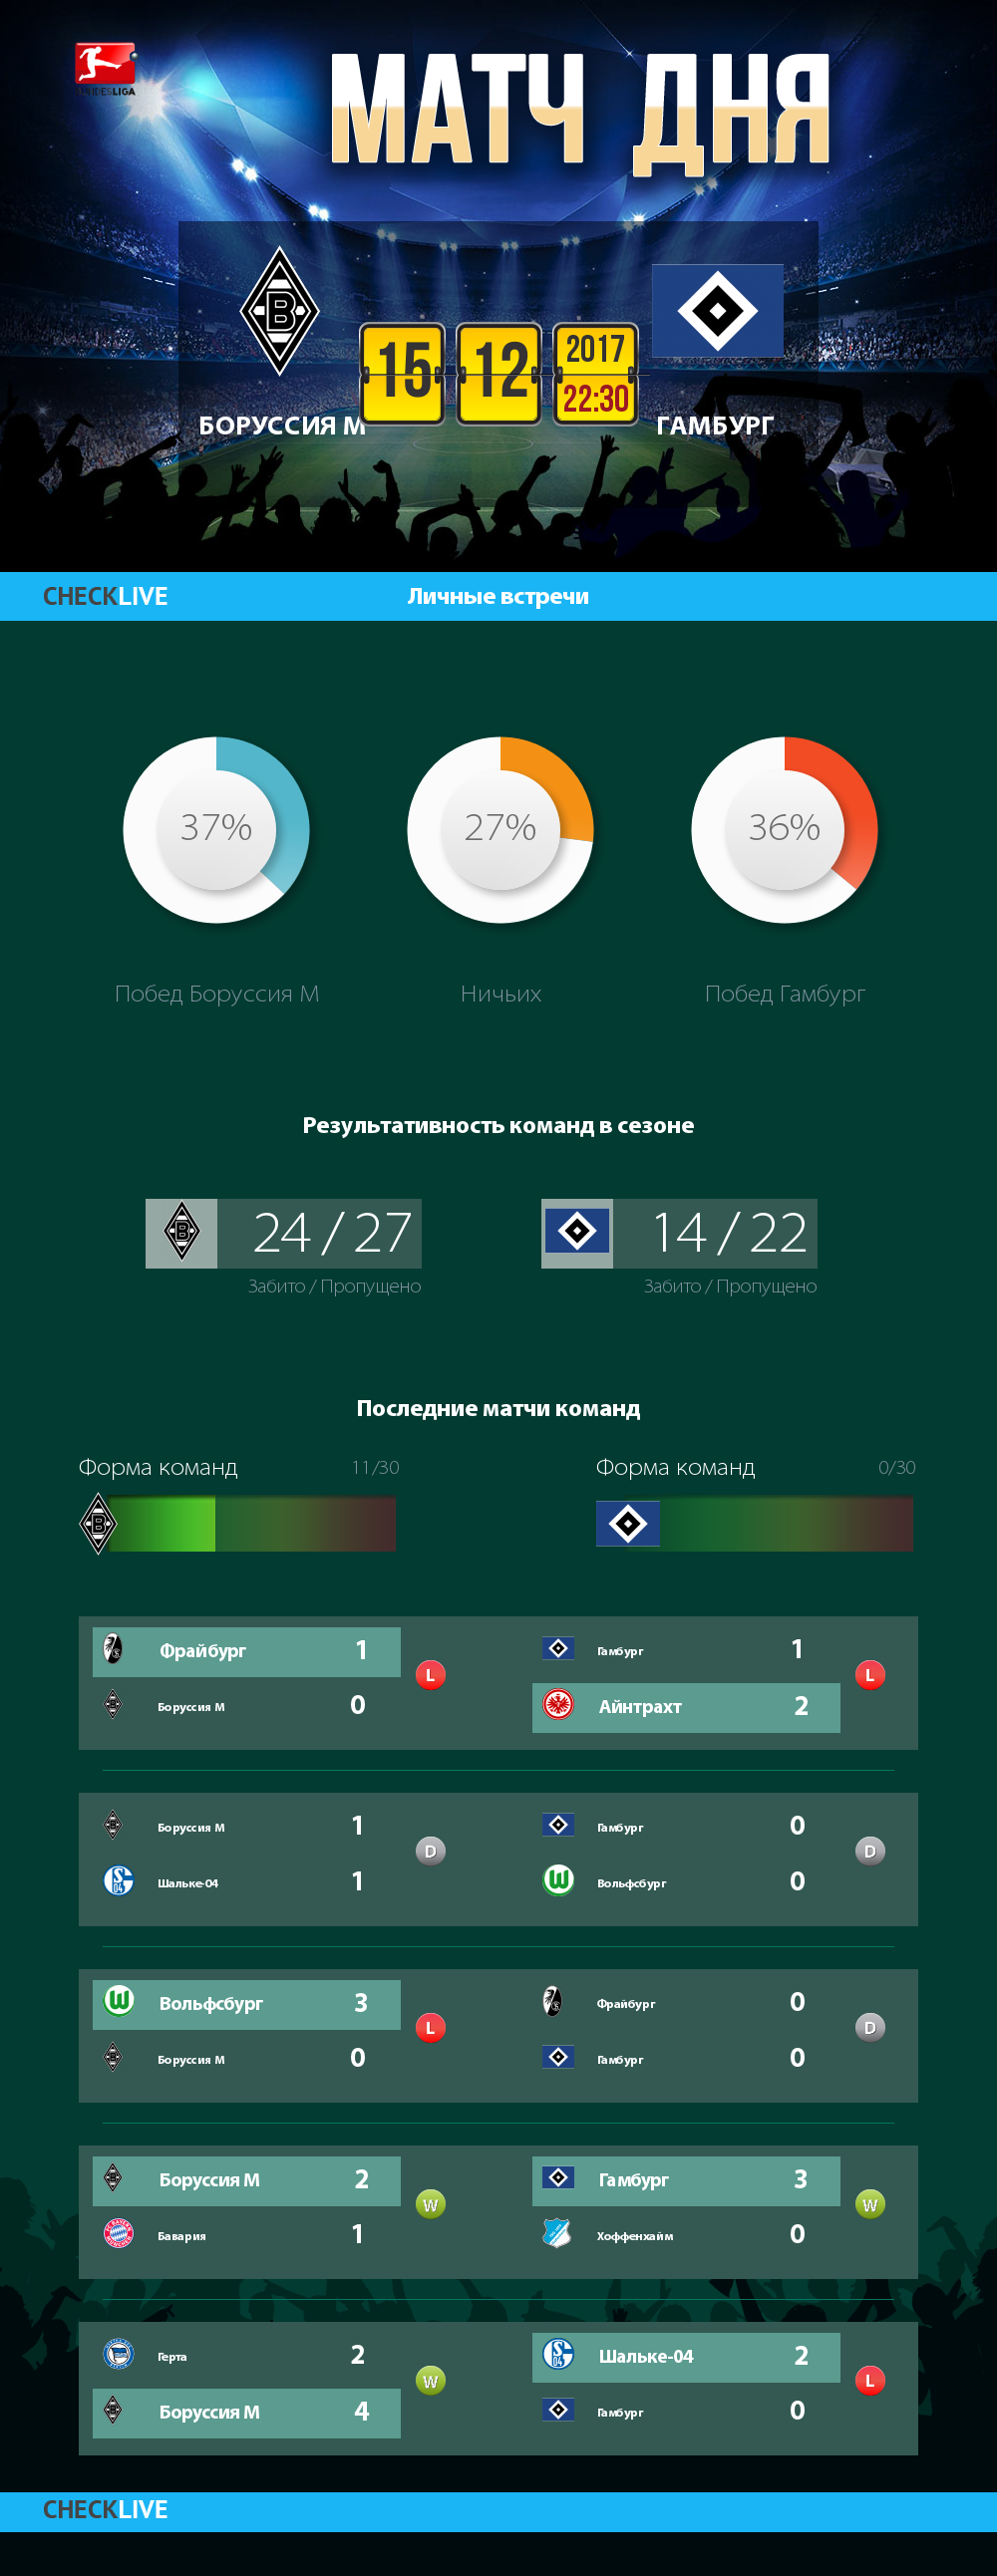 Инфографика Боруссия М и Гамбург матч дня 15.12.2017